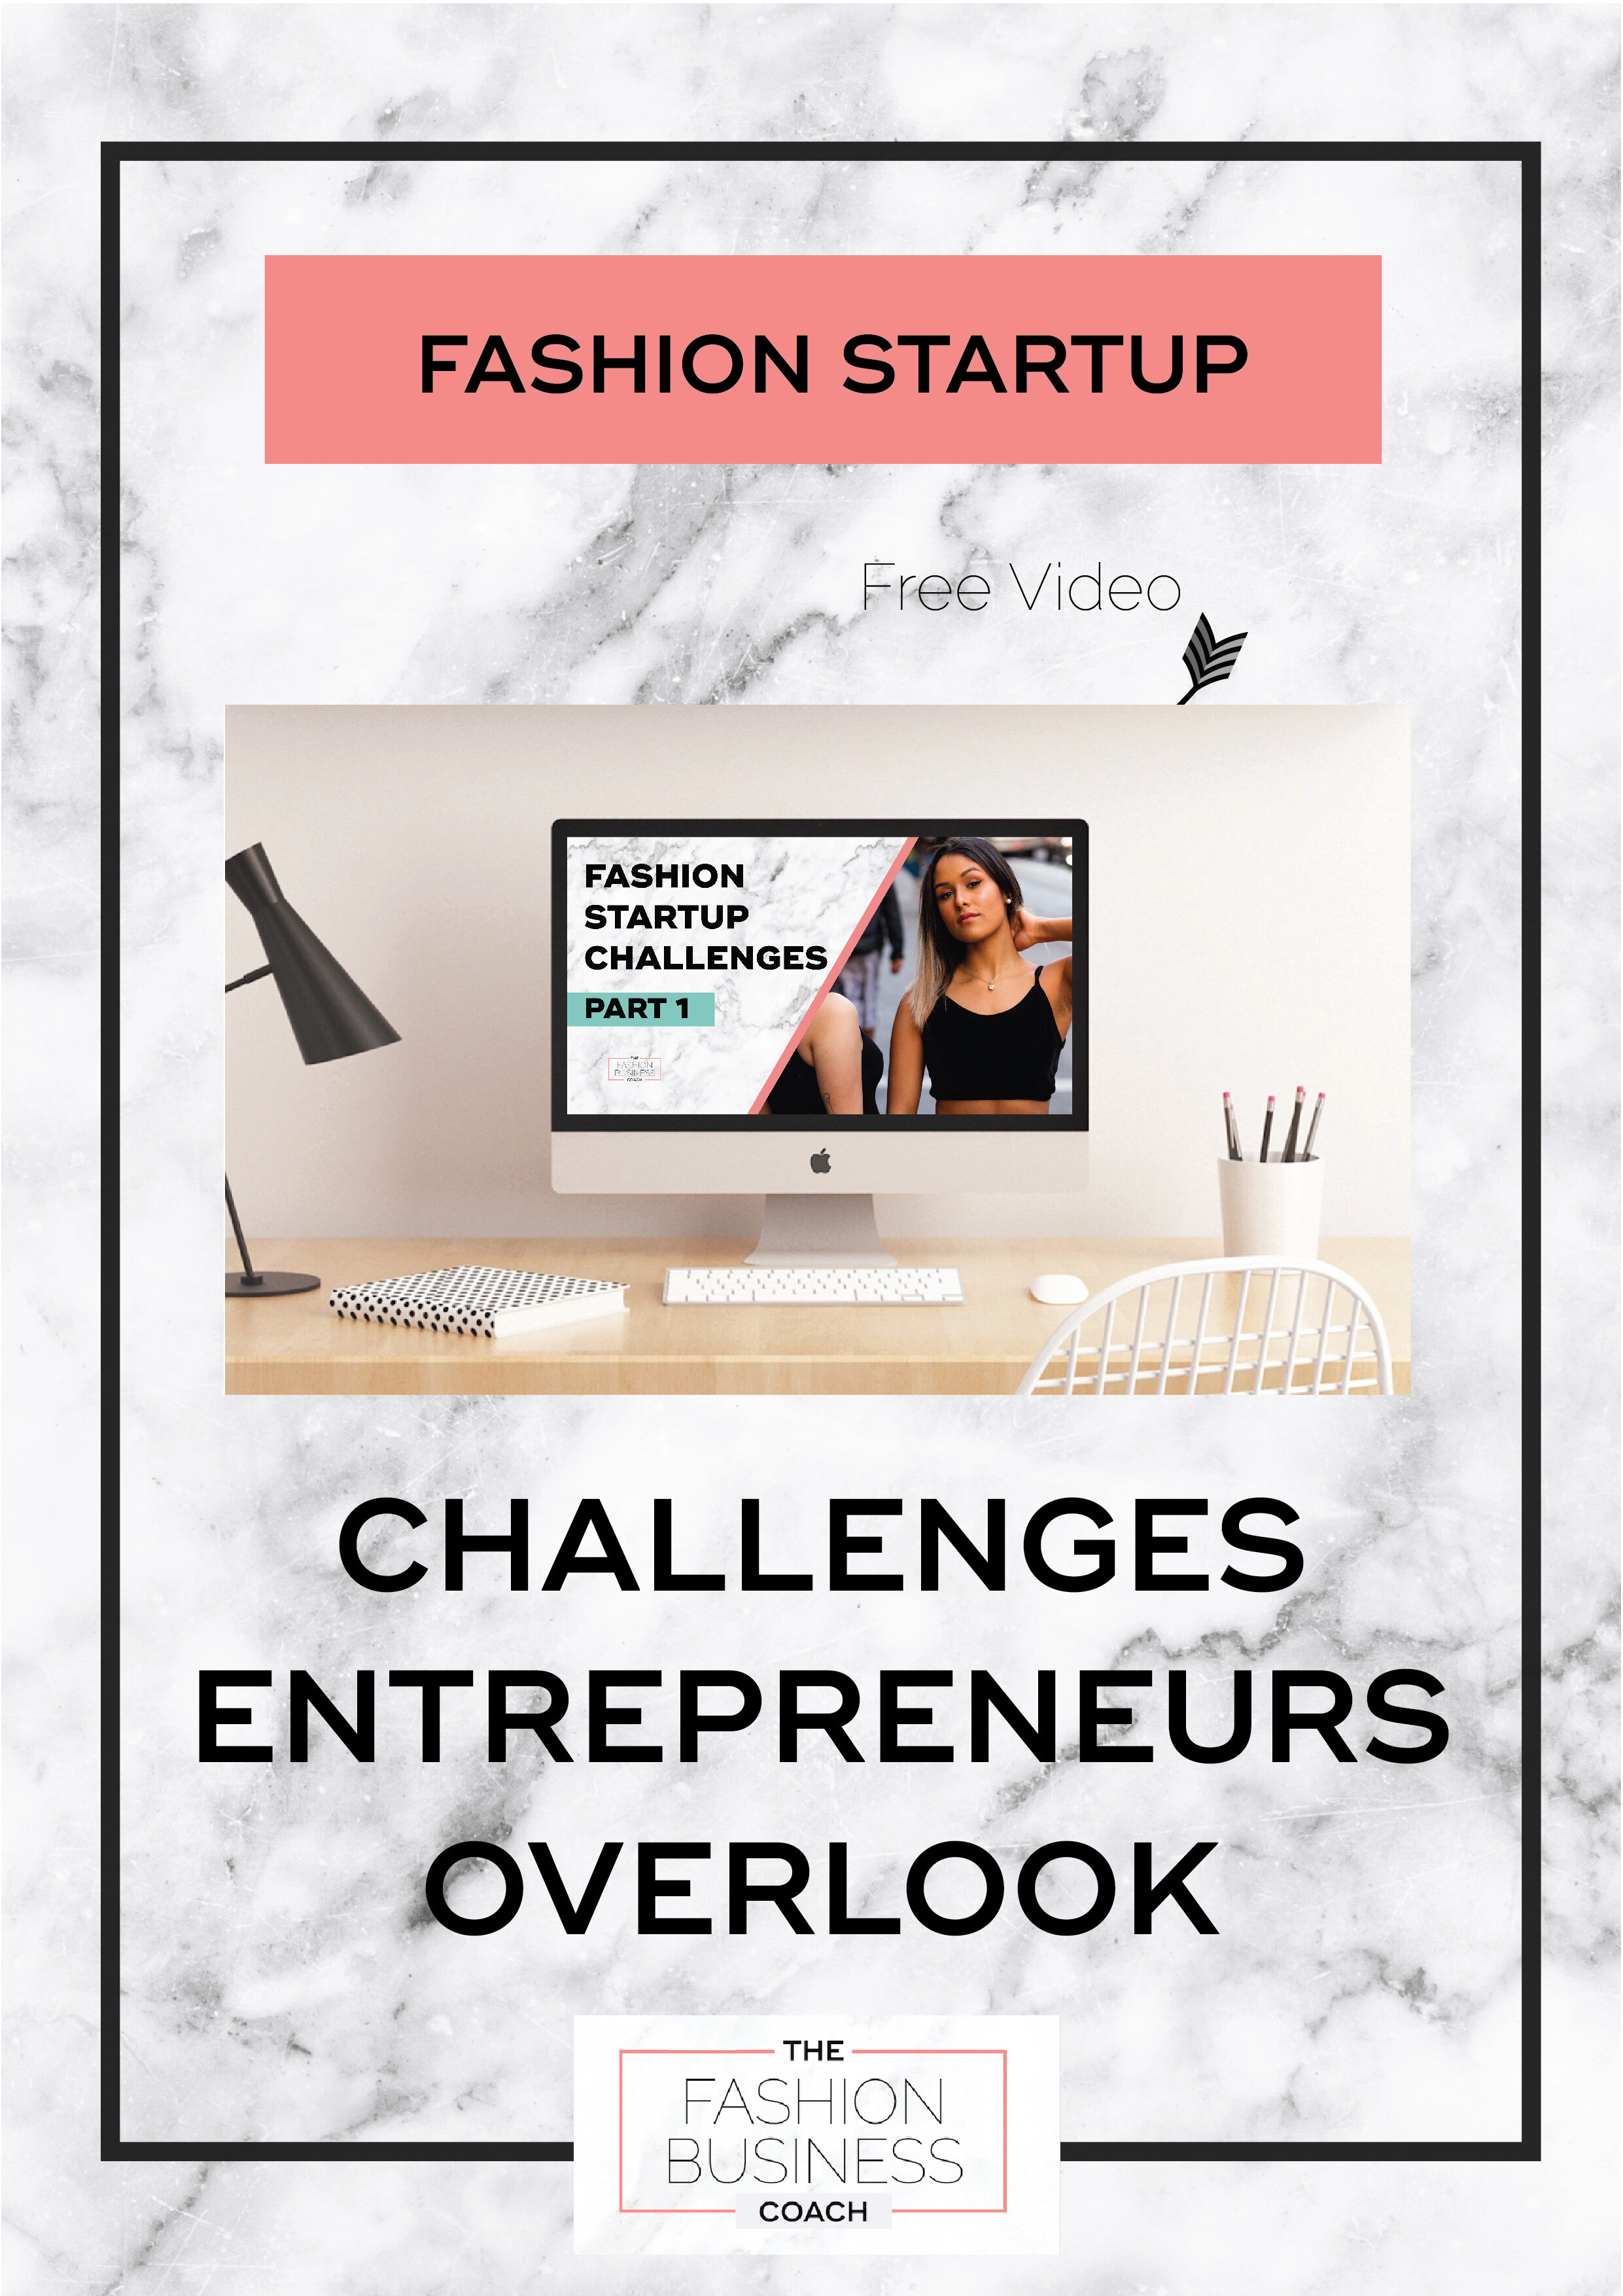 Fashion Startup Challenges Enterpreneurs Overlook1.jpg